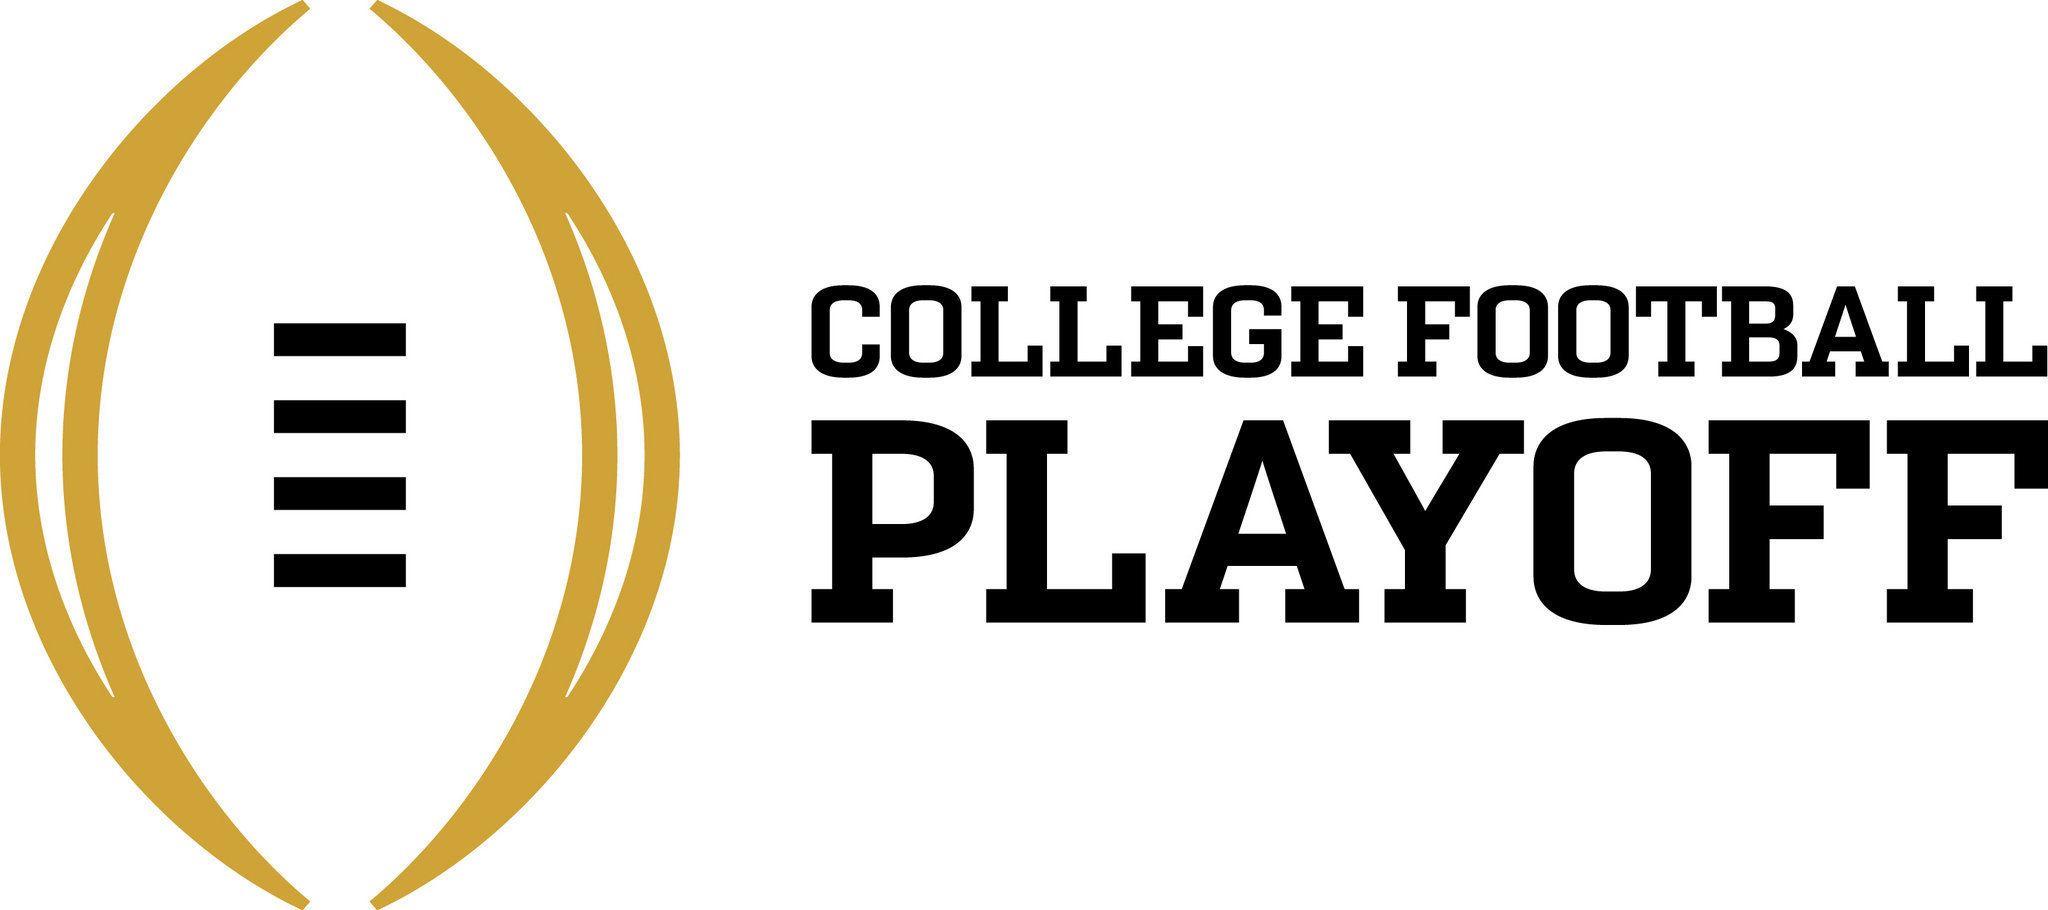 College Football Logo - College football playoff Logos